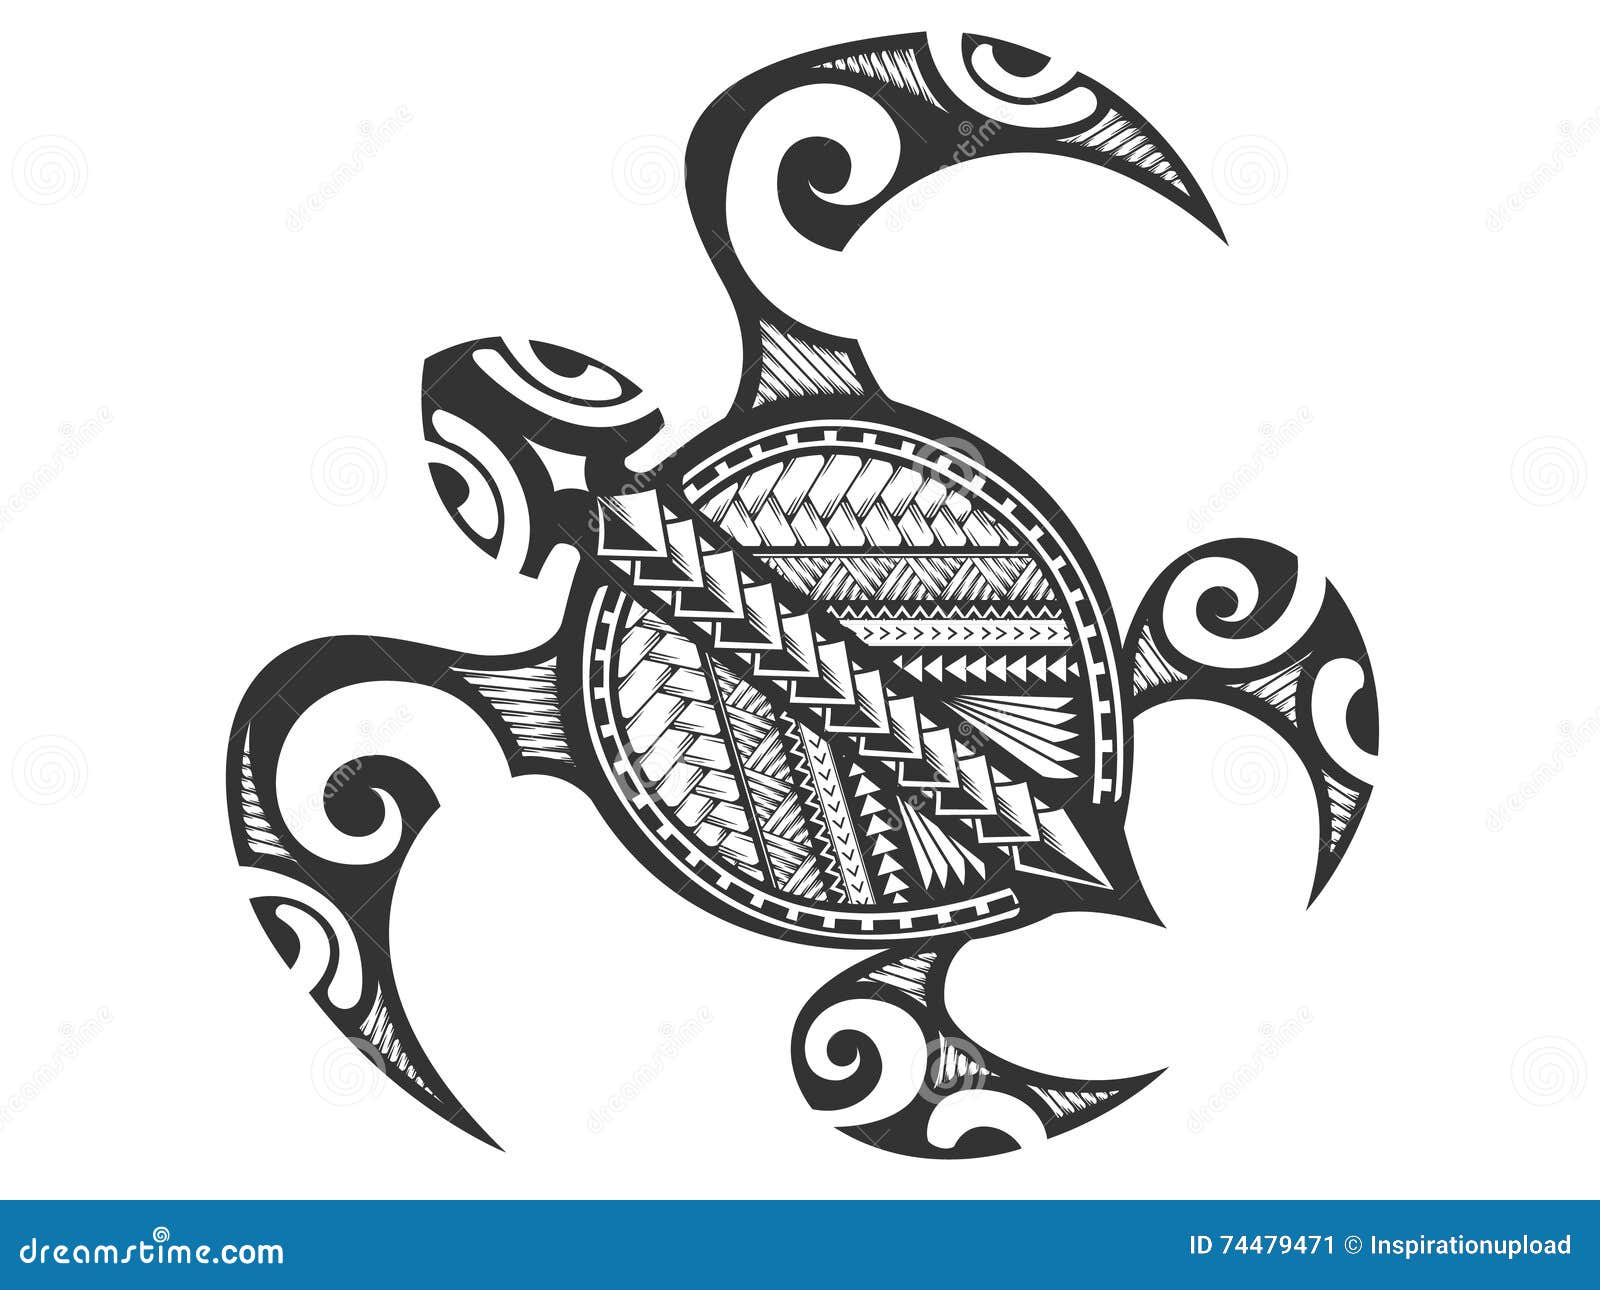 92 Turtle Tattoos Polynesian Hawaiian Tribal Turtle Designs Images Stock  Photos  Vectors  Shutterstock